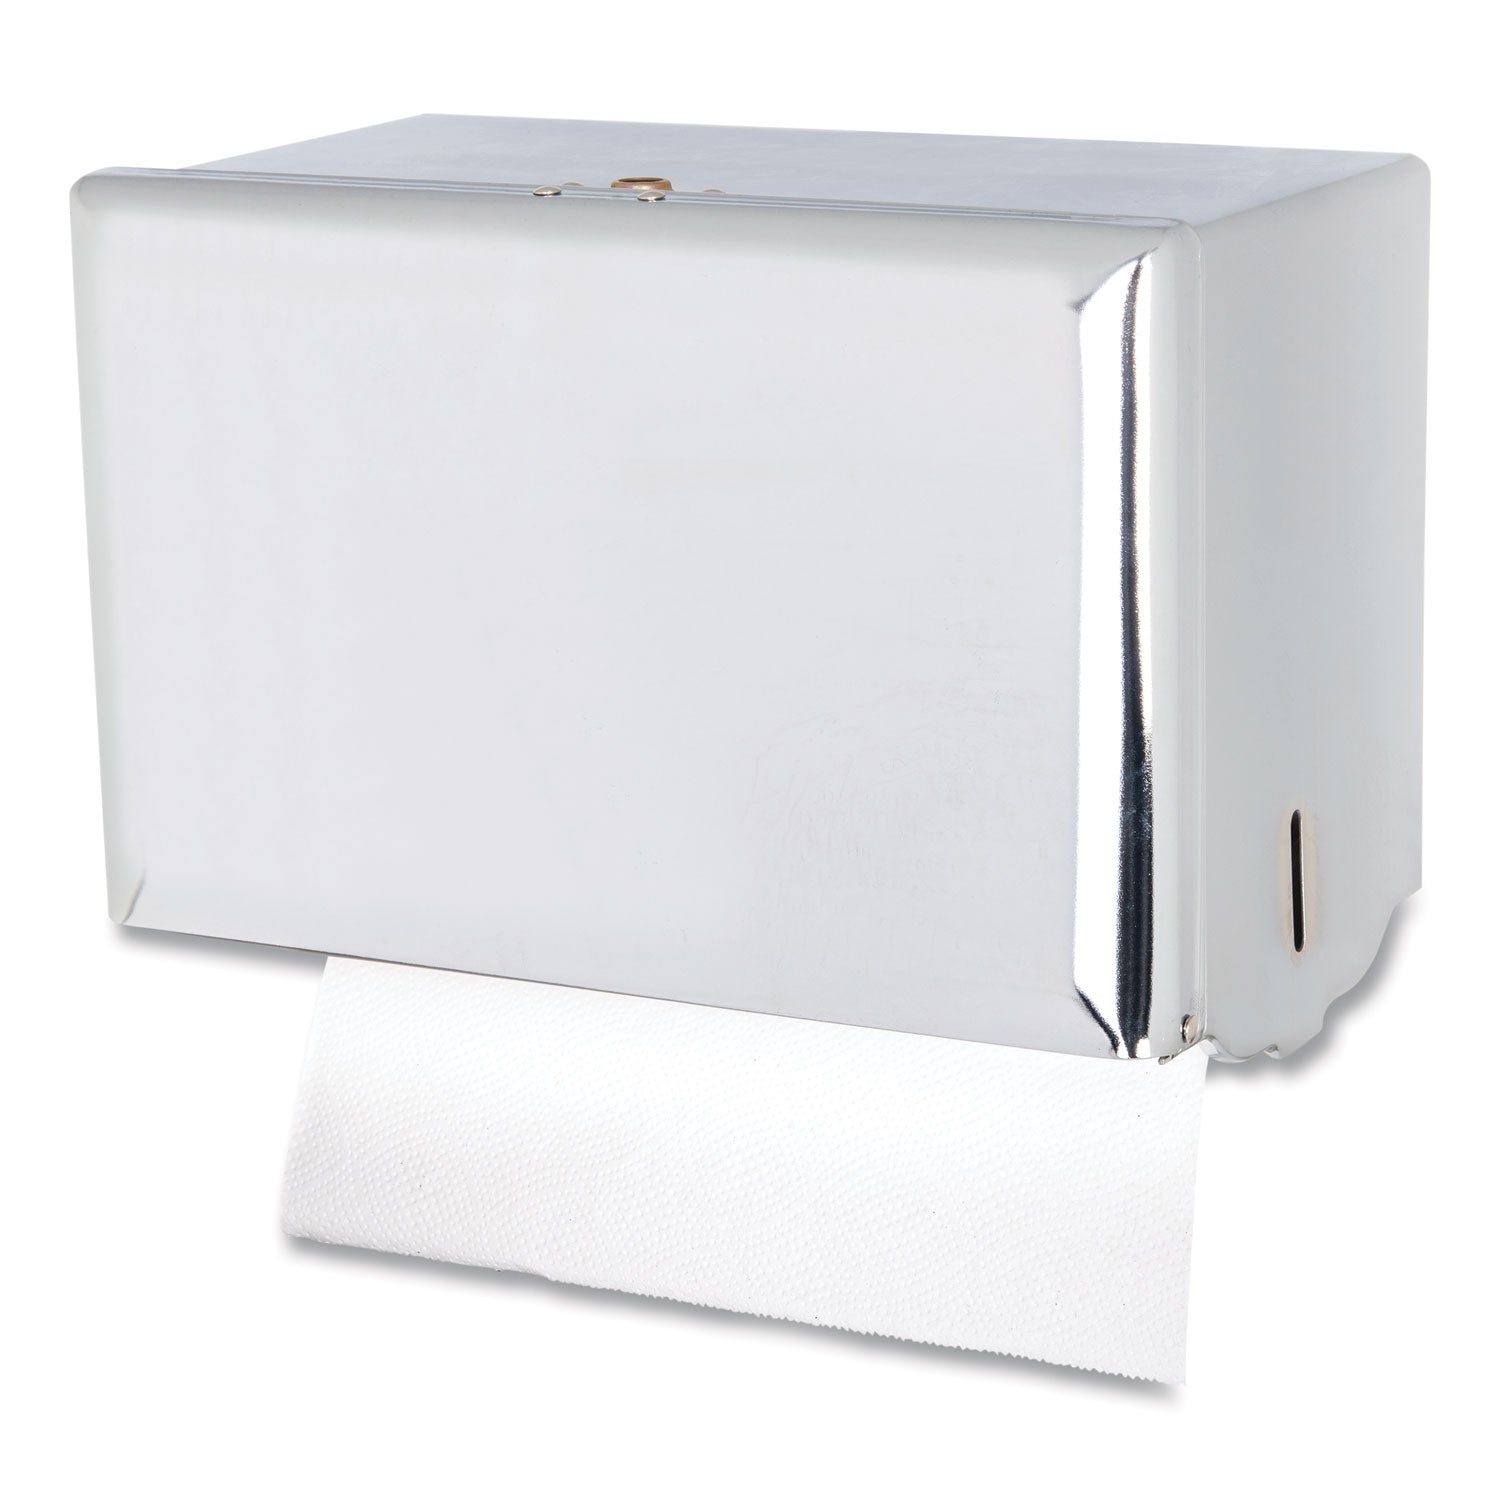 Singlefold Paper Towel Dispenser, 10.75 x 6 x 7.5, Chrome - 